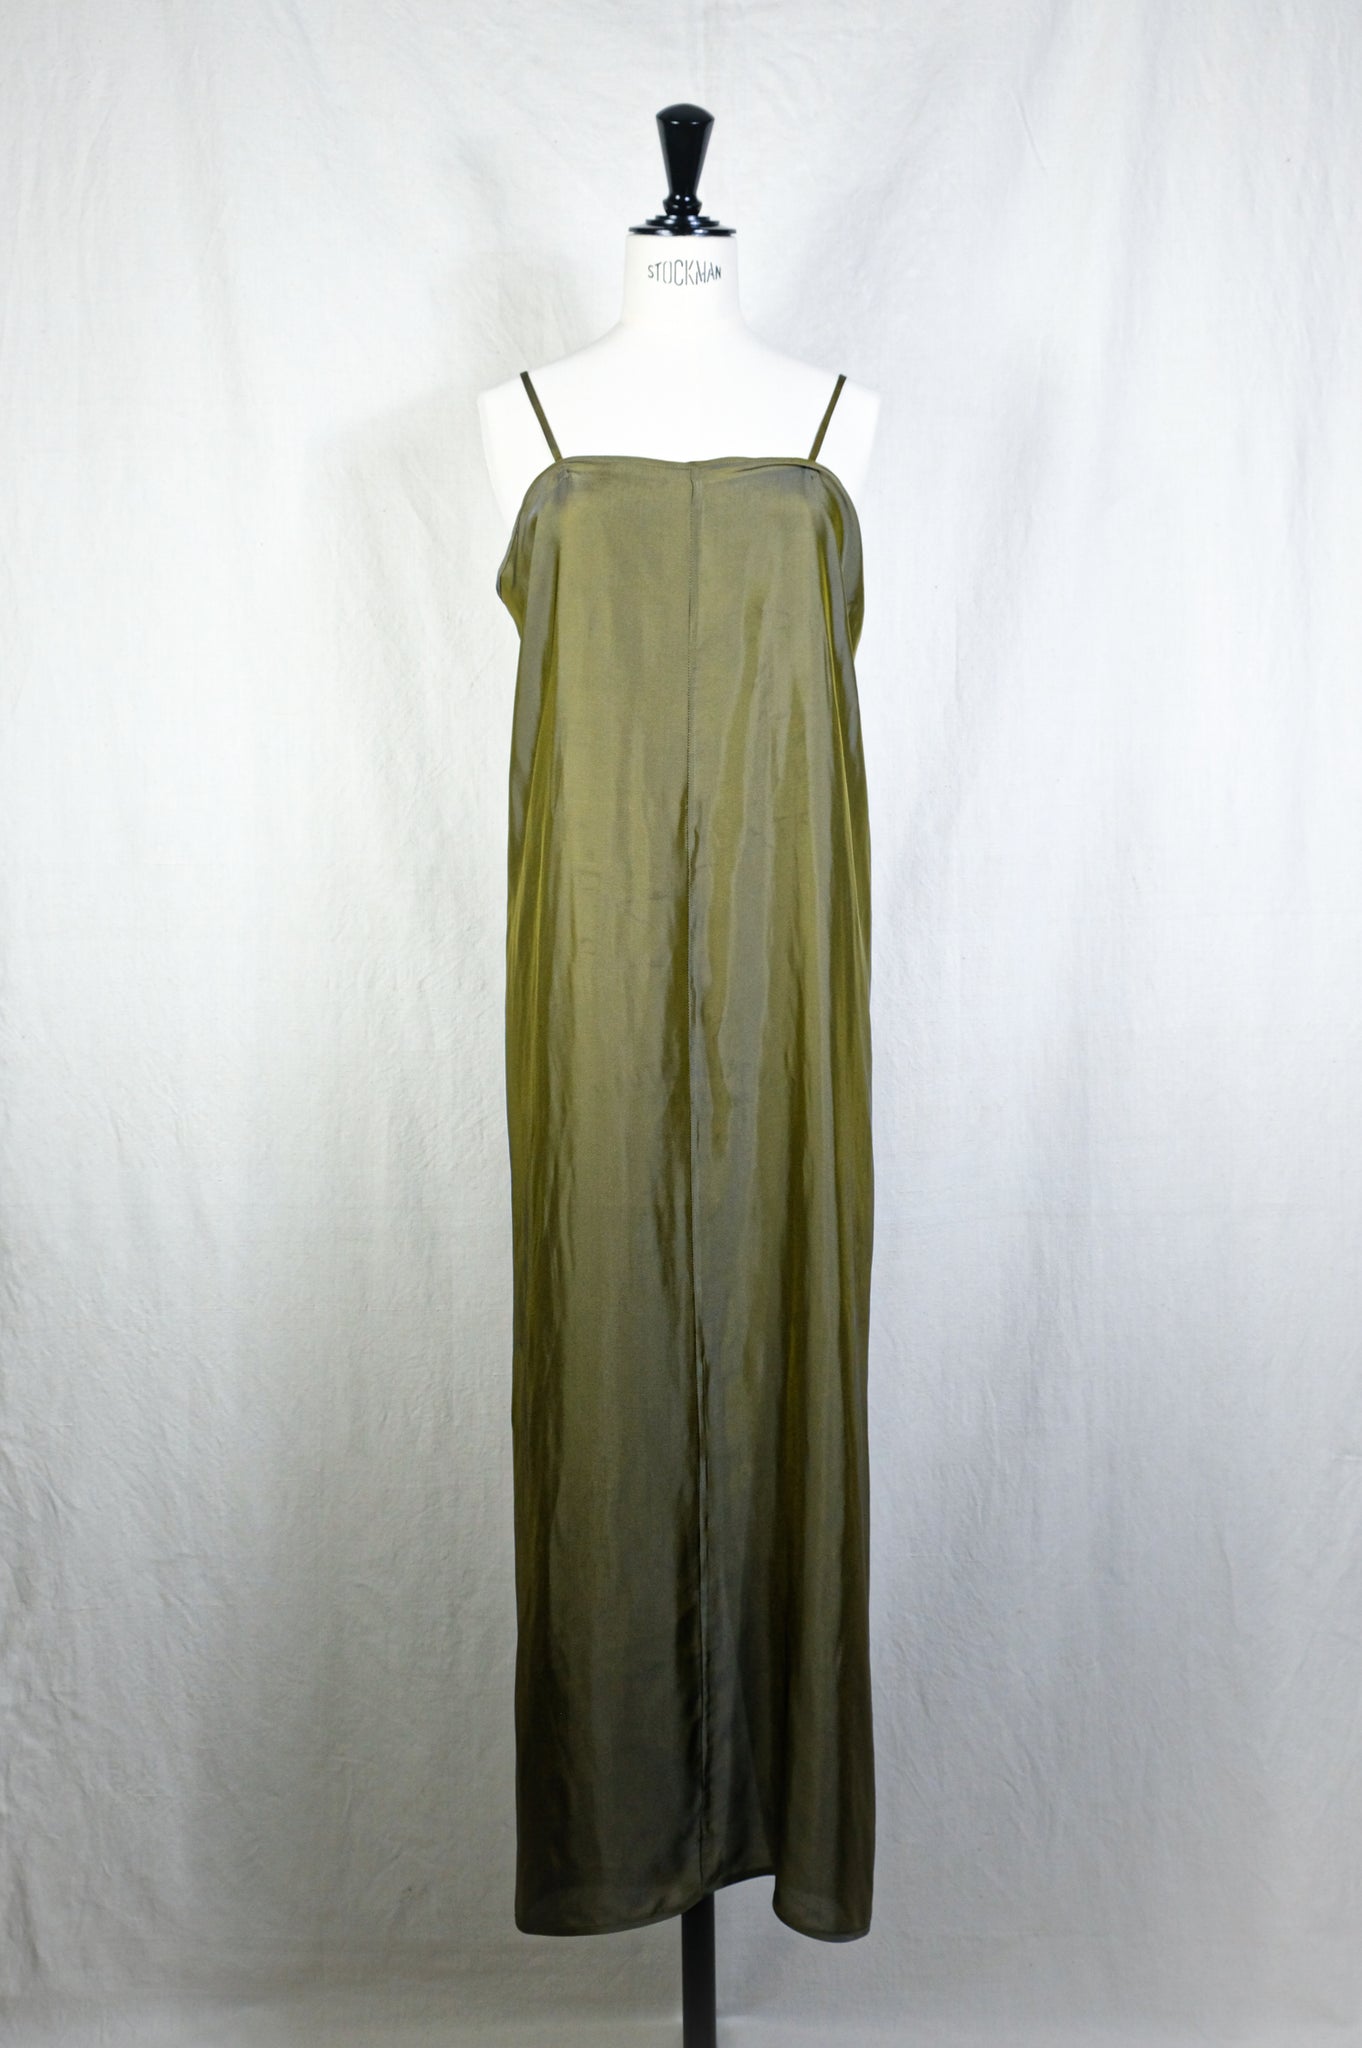 Gabriela Coll Garments "NO.269 GRAPHENE SLIP DRESS"